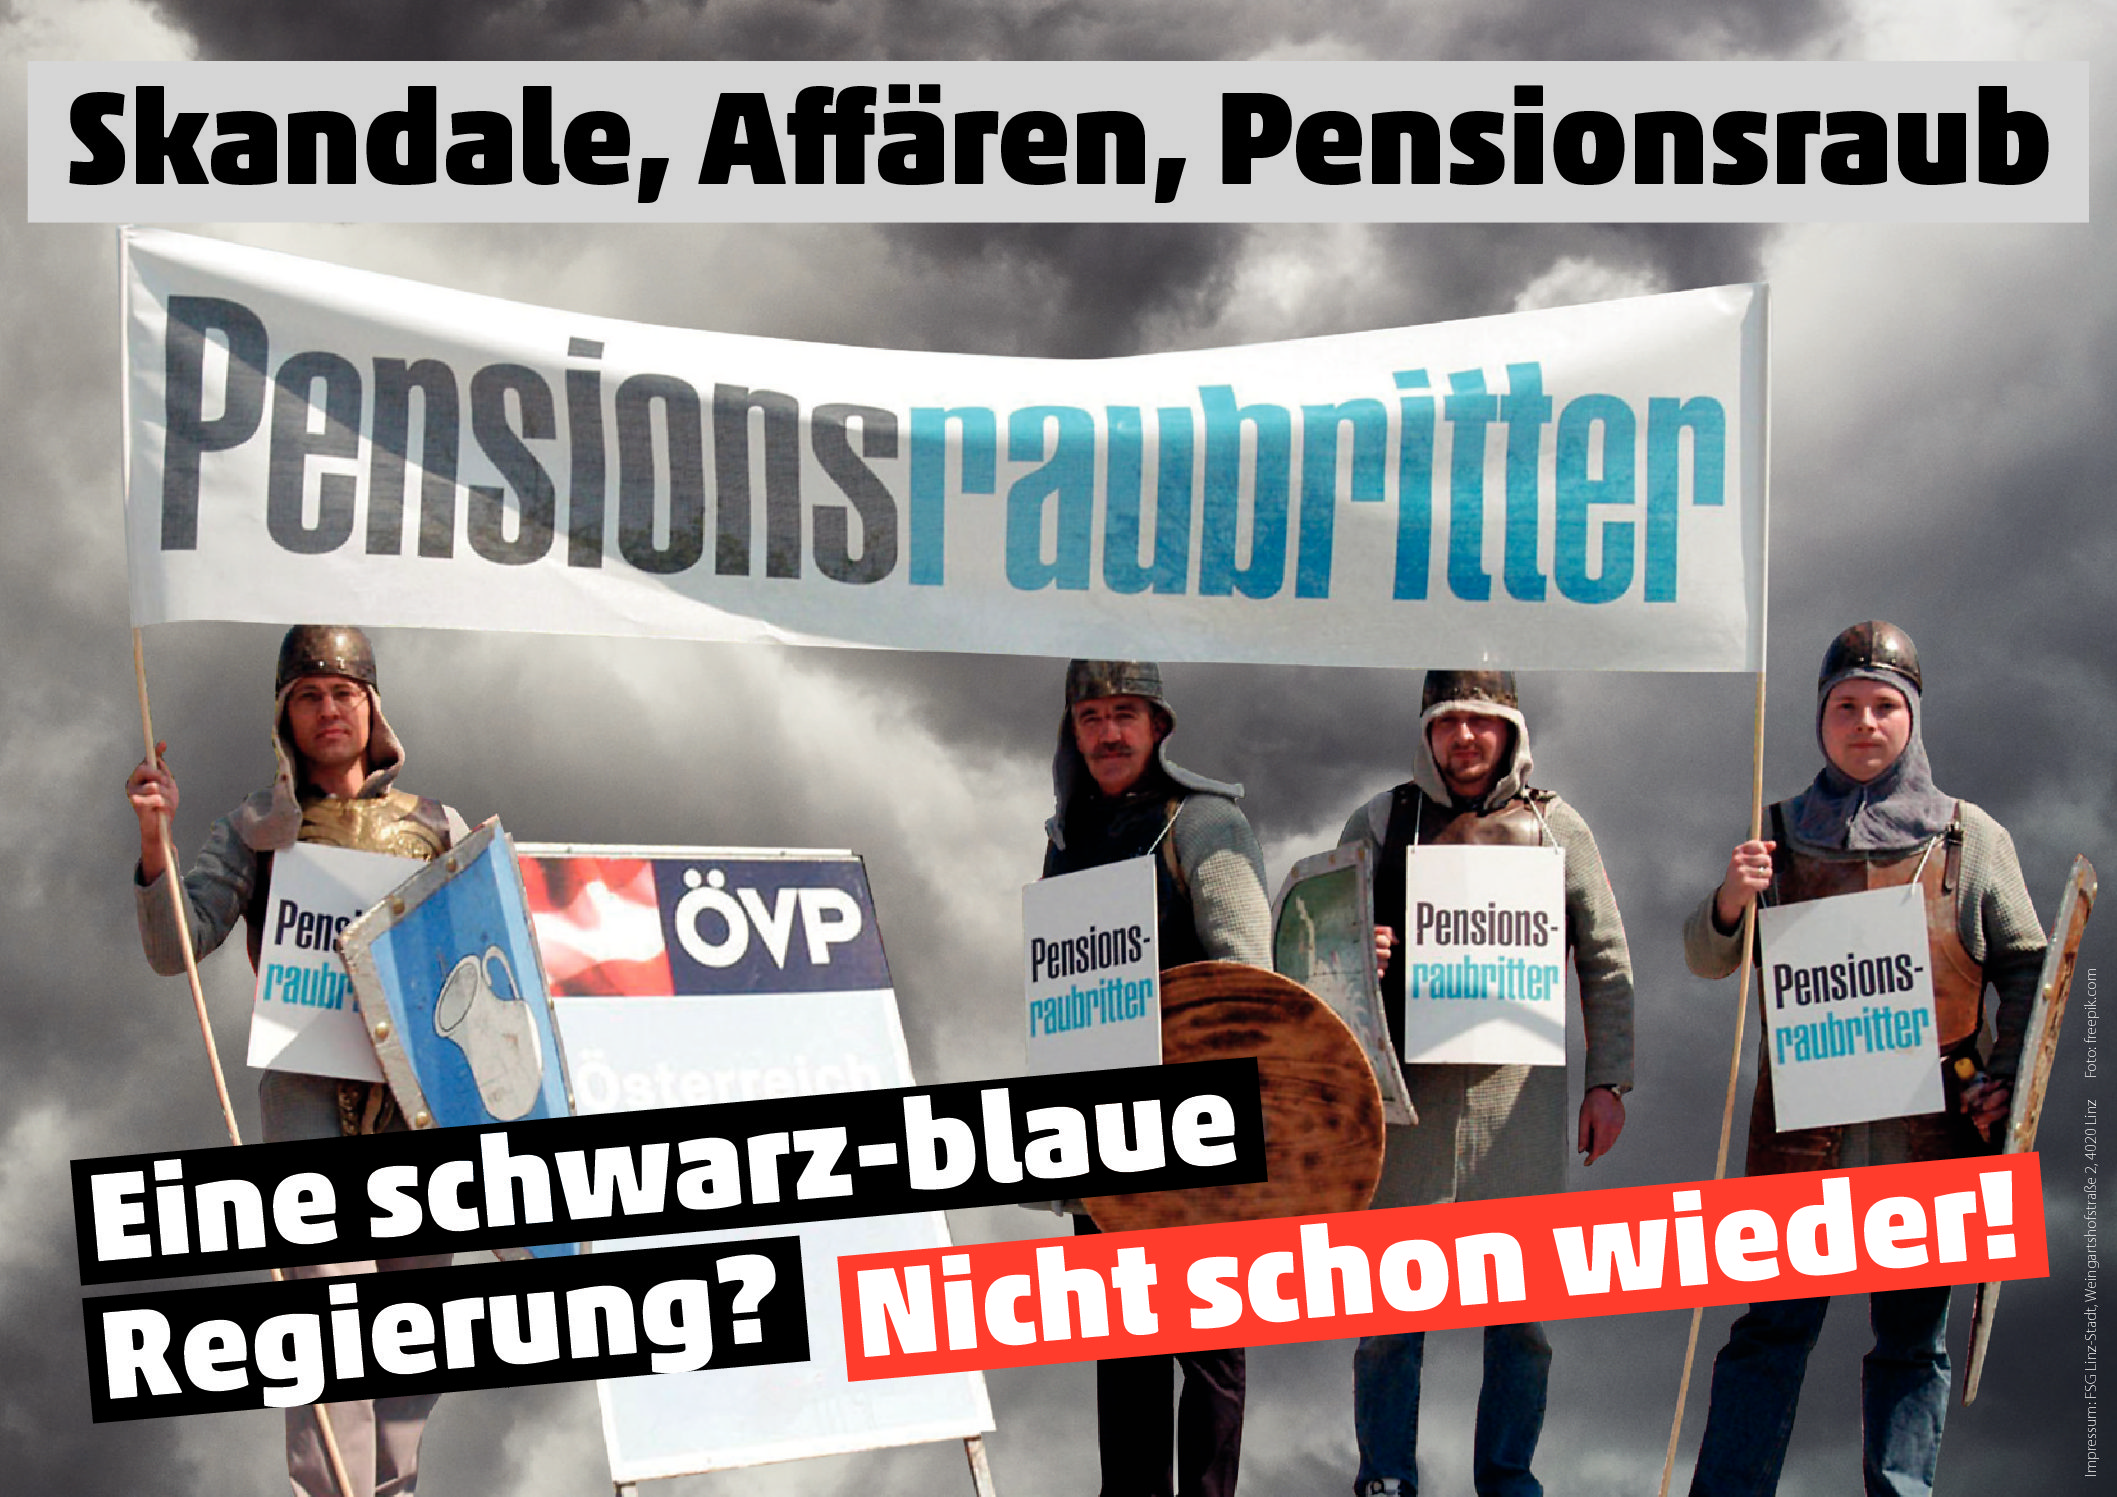 Neues Plakat: Schwarz-blau: Skandale, Affären, Pensionsraub